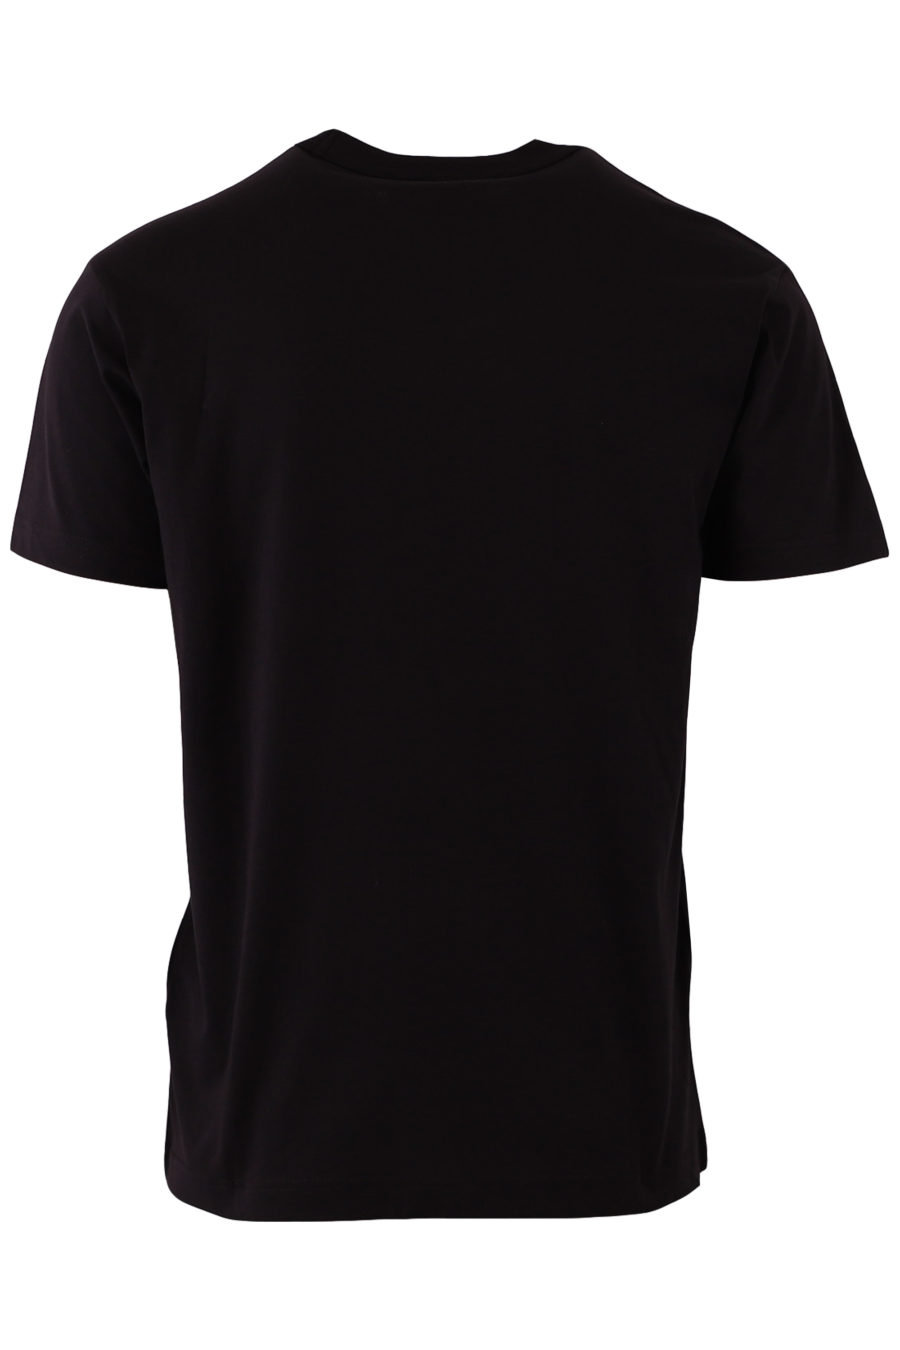 Camiseta negra con logotipo de colores - 6f561fe72c9b5f9201b209f06e08c075613edccf